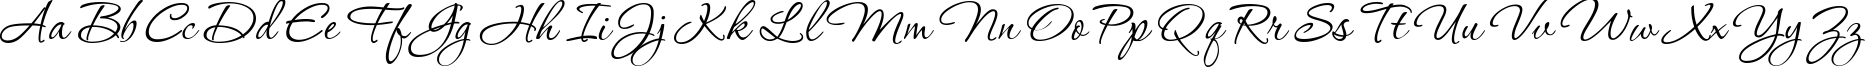 Пример написания английского алфавита шрифтом P22 Corinthia